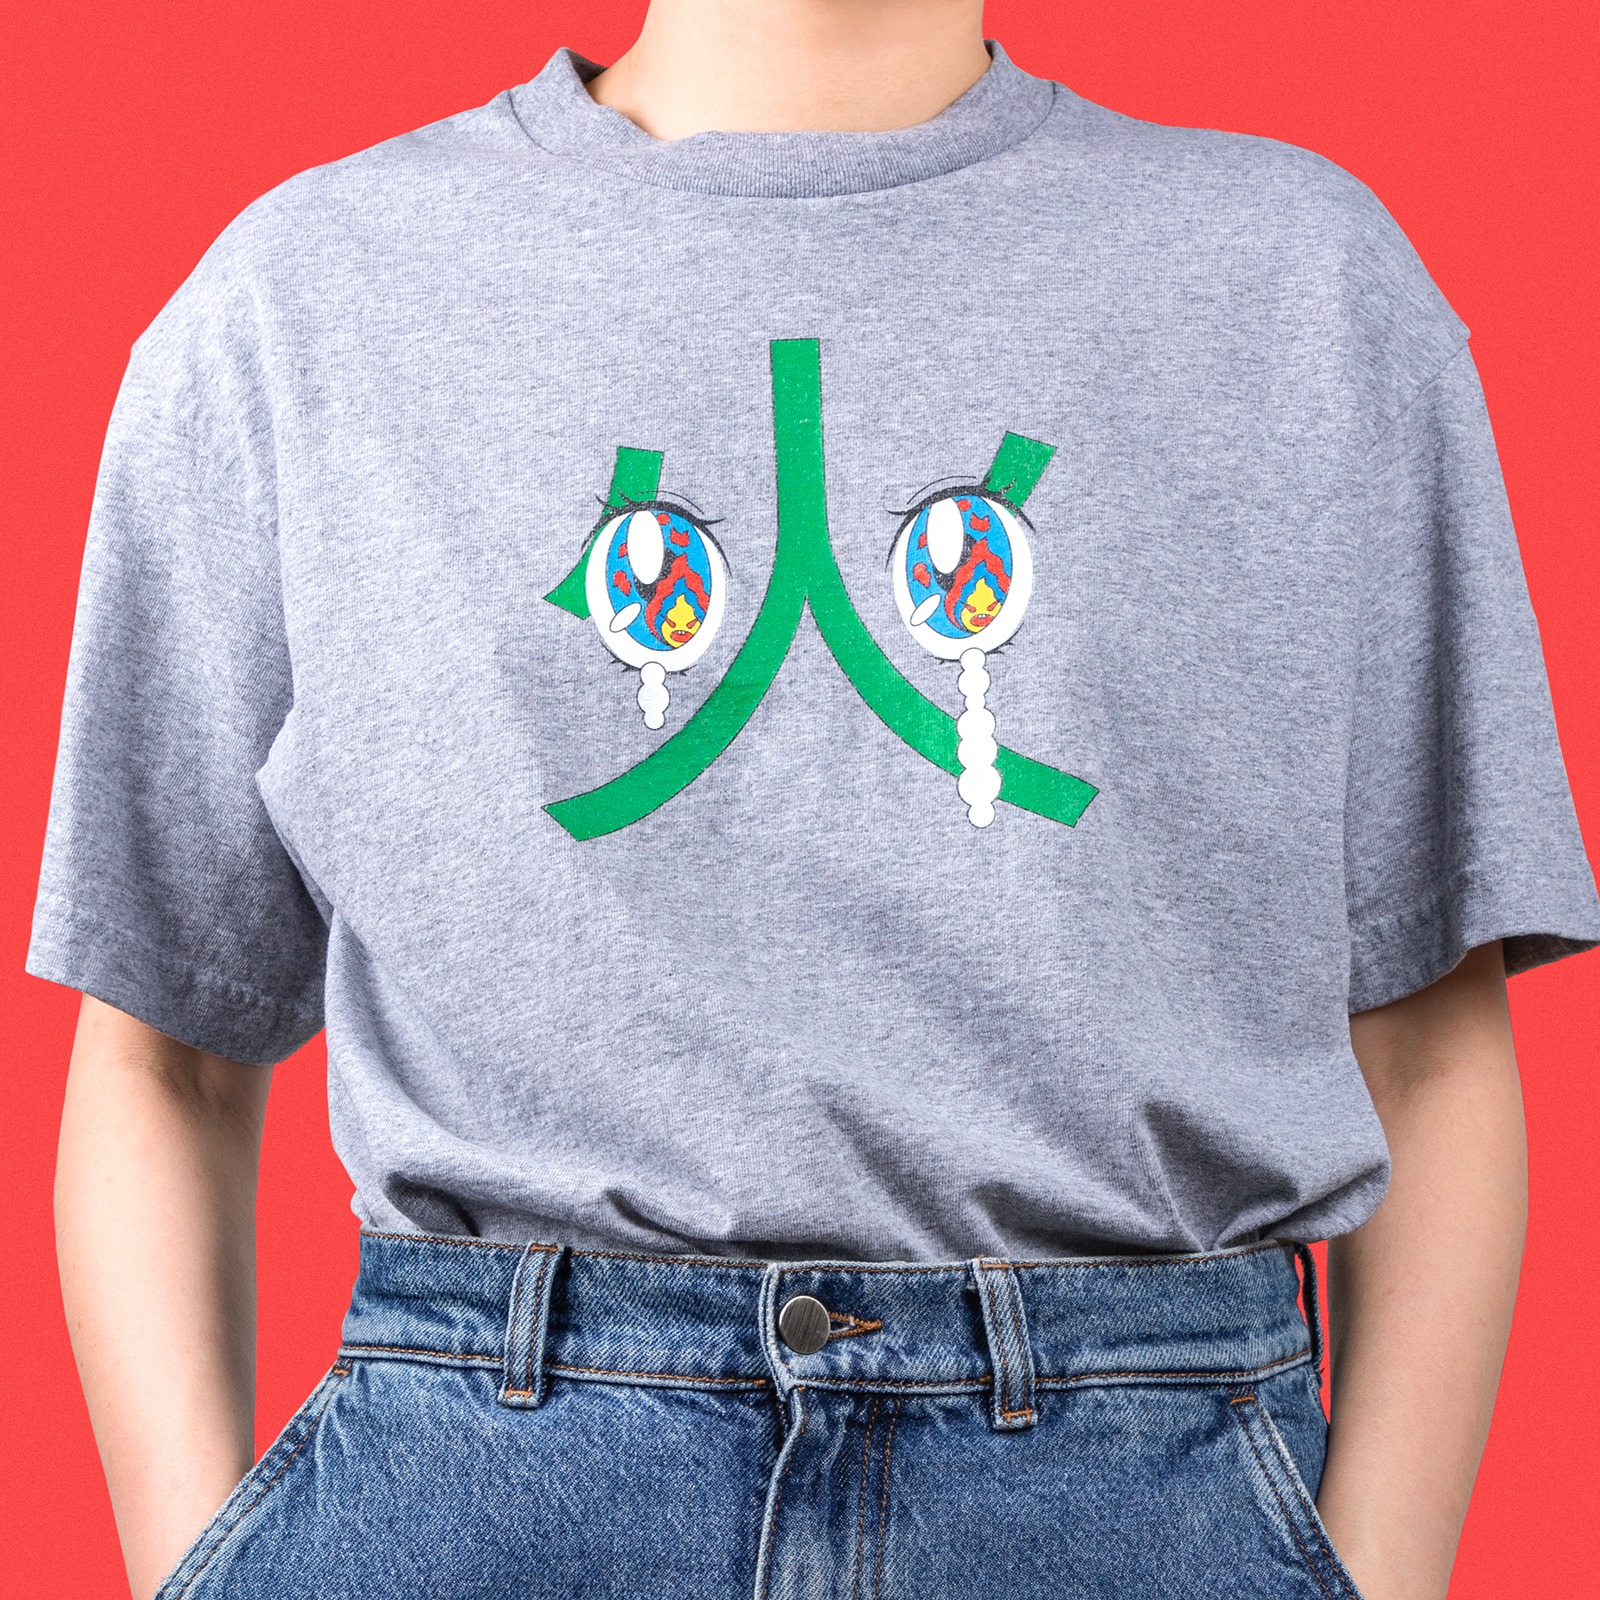 NF-T-shirt: EYES — Anger